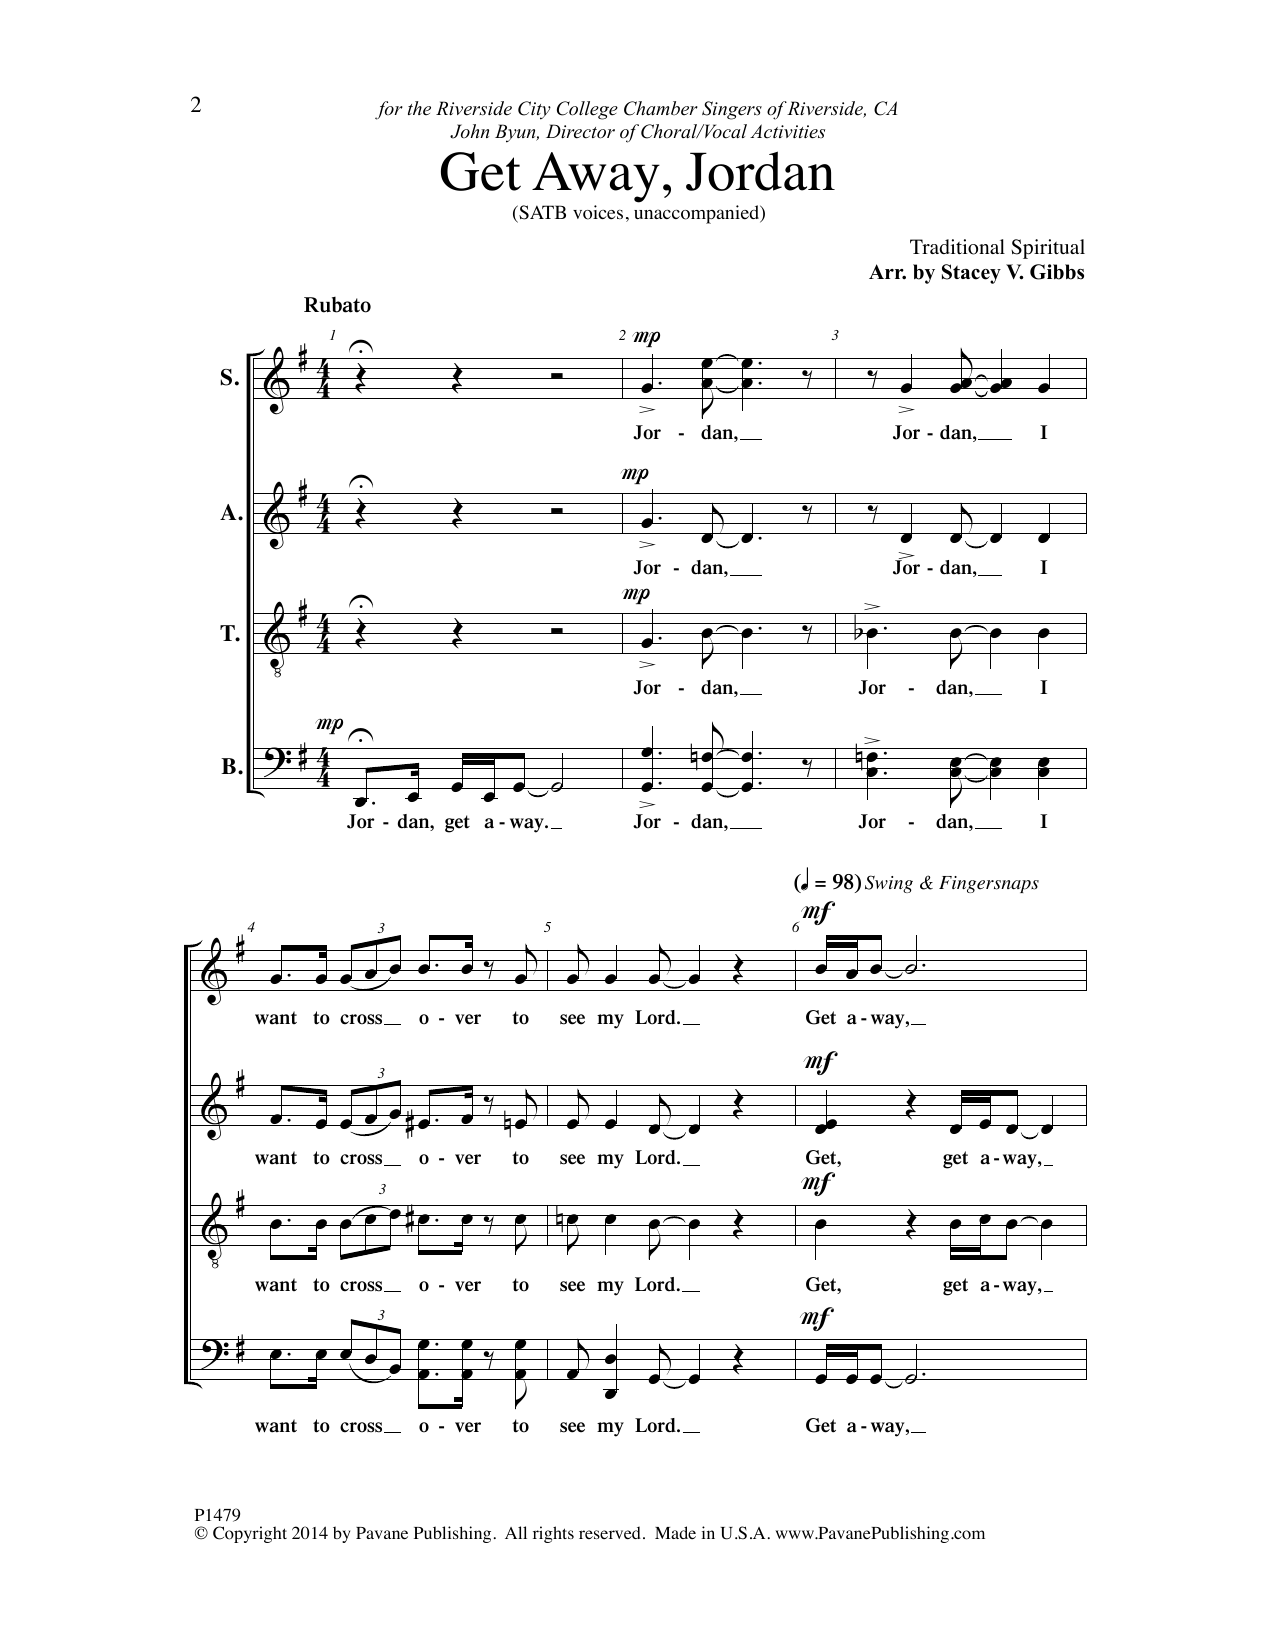 Stacey V. Gibbs Get Away, Jordon Sheet Music Notes & Chords for Choral - Download or Print PDF